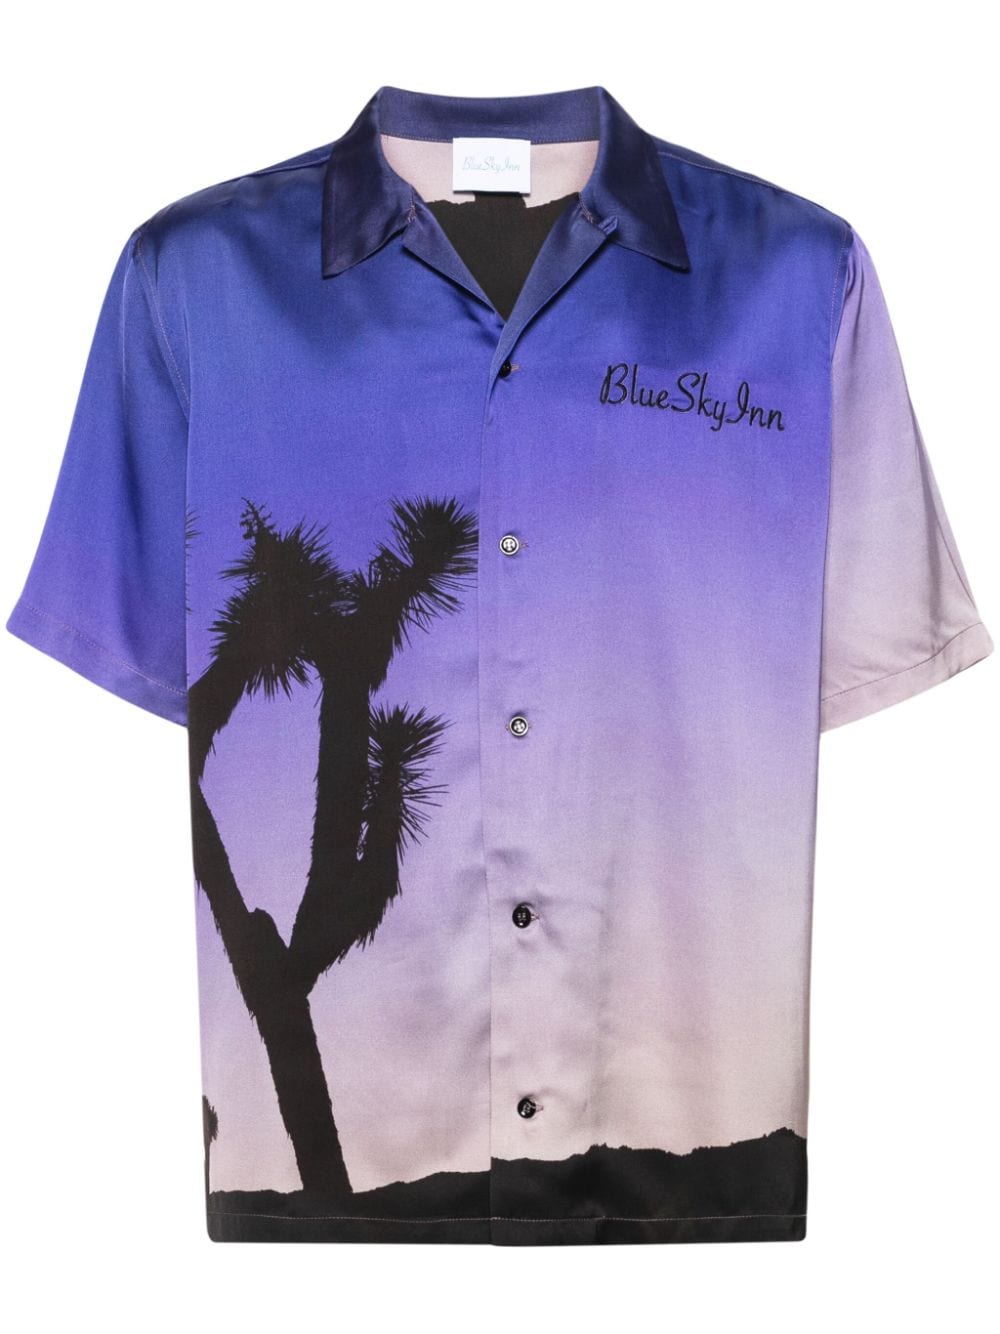 BLUE SKY INN BLUE SKY INN- Printed Viscose Shirt